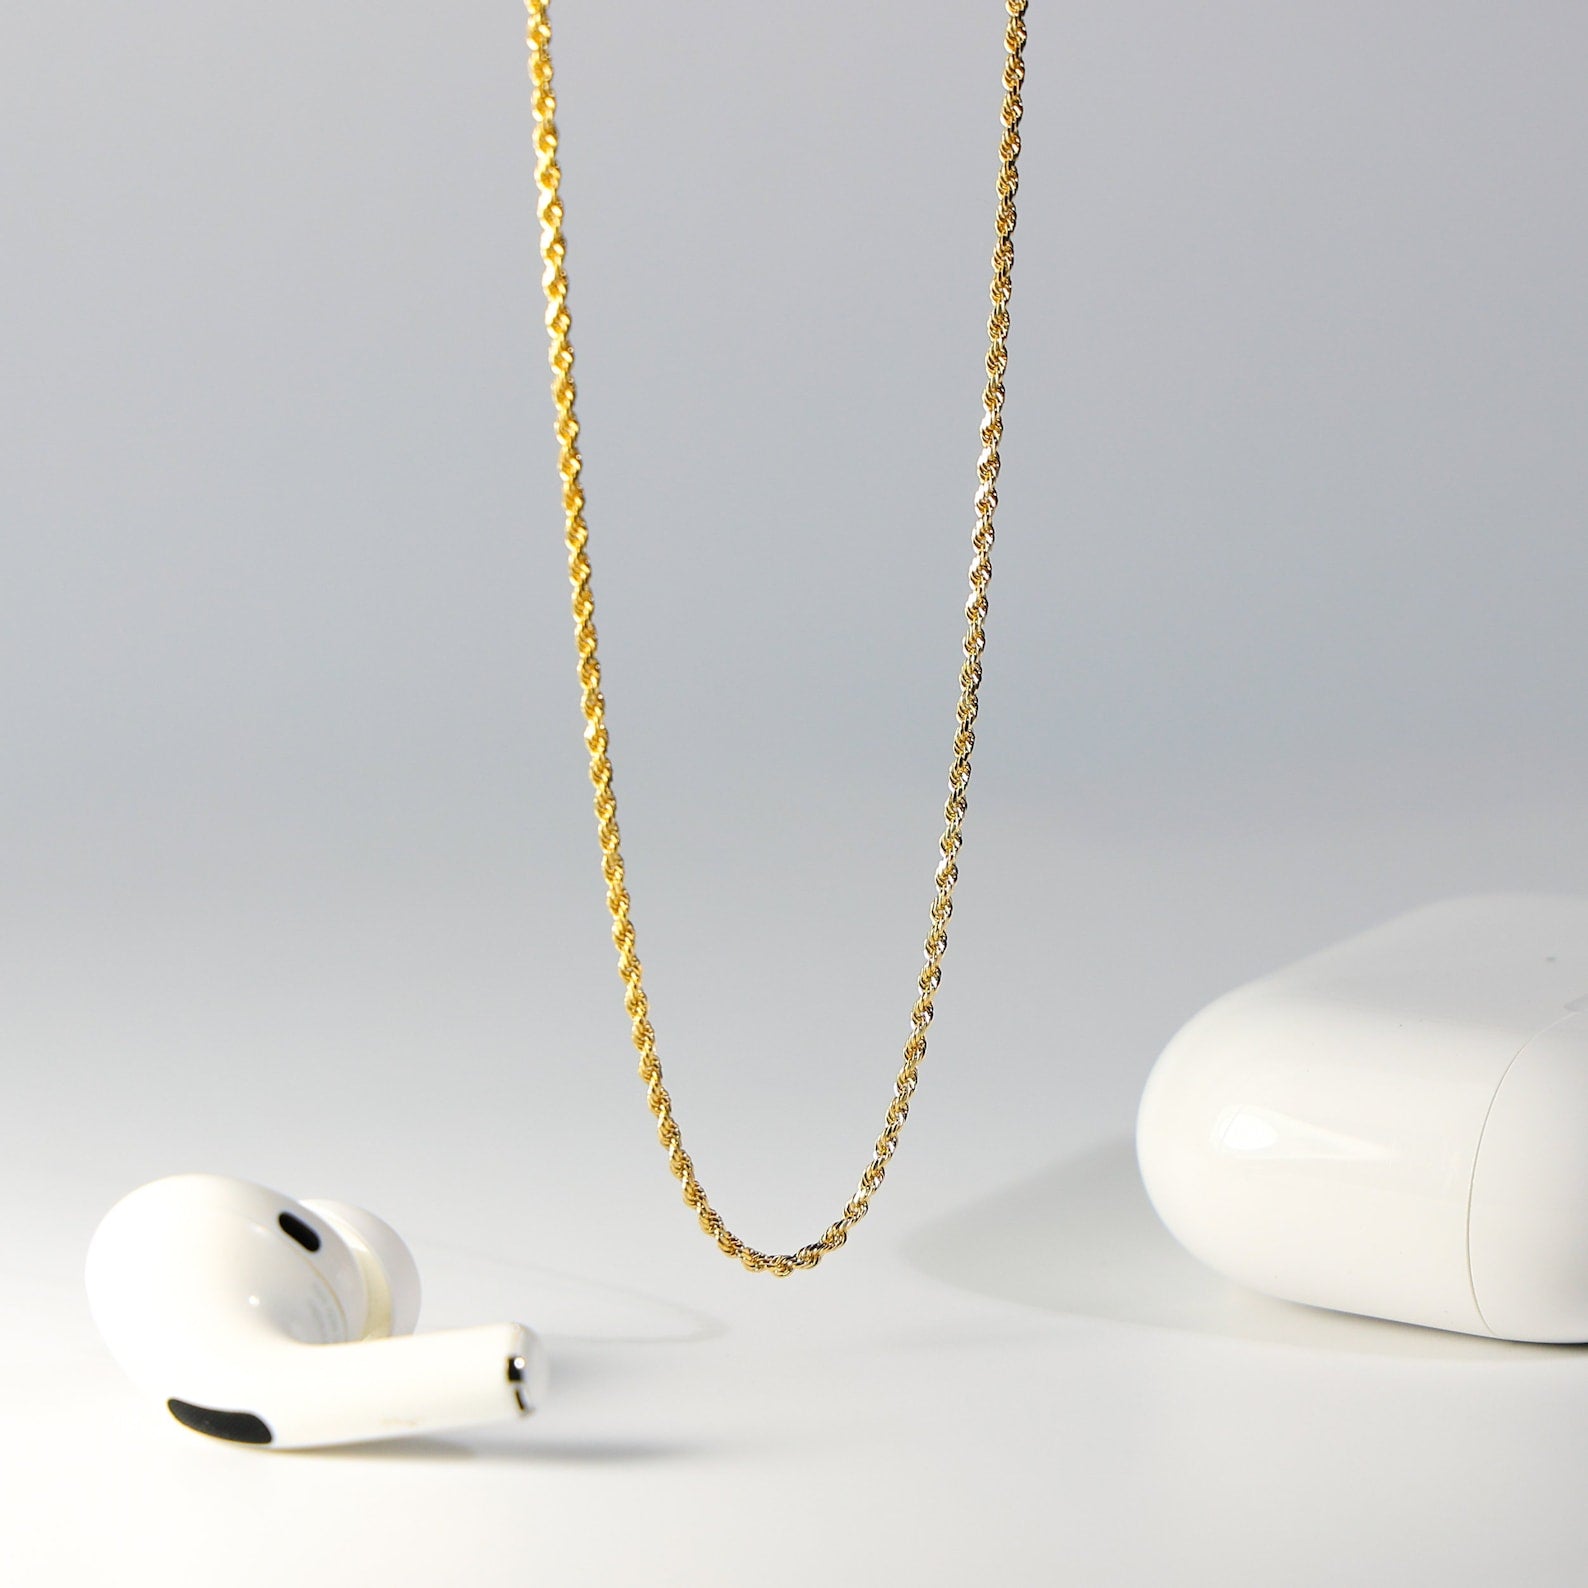 Gold Heart Key Pendant Model-451 - Charlie & Co. Jewelry